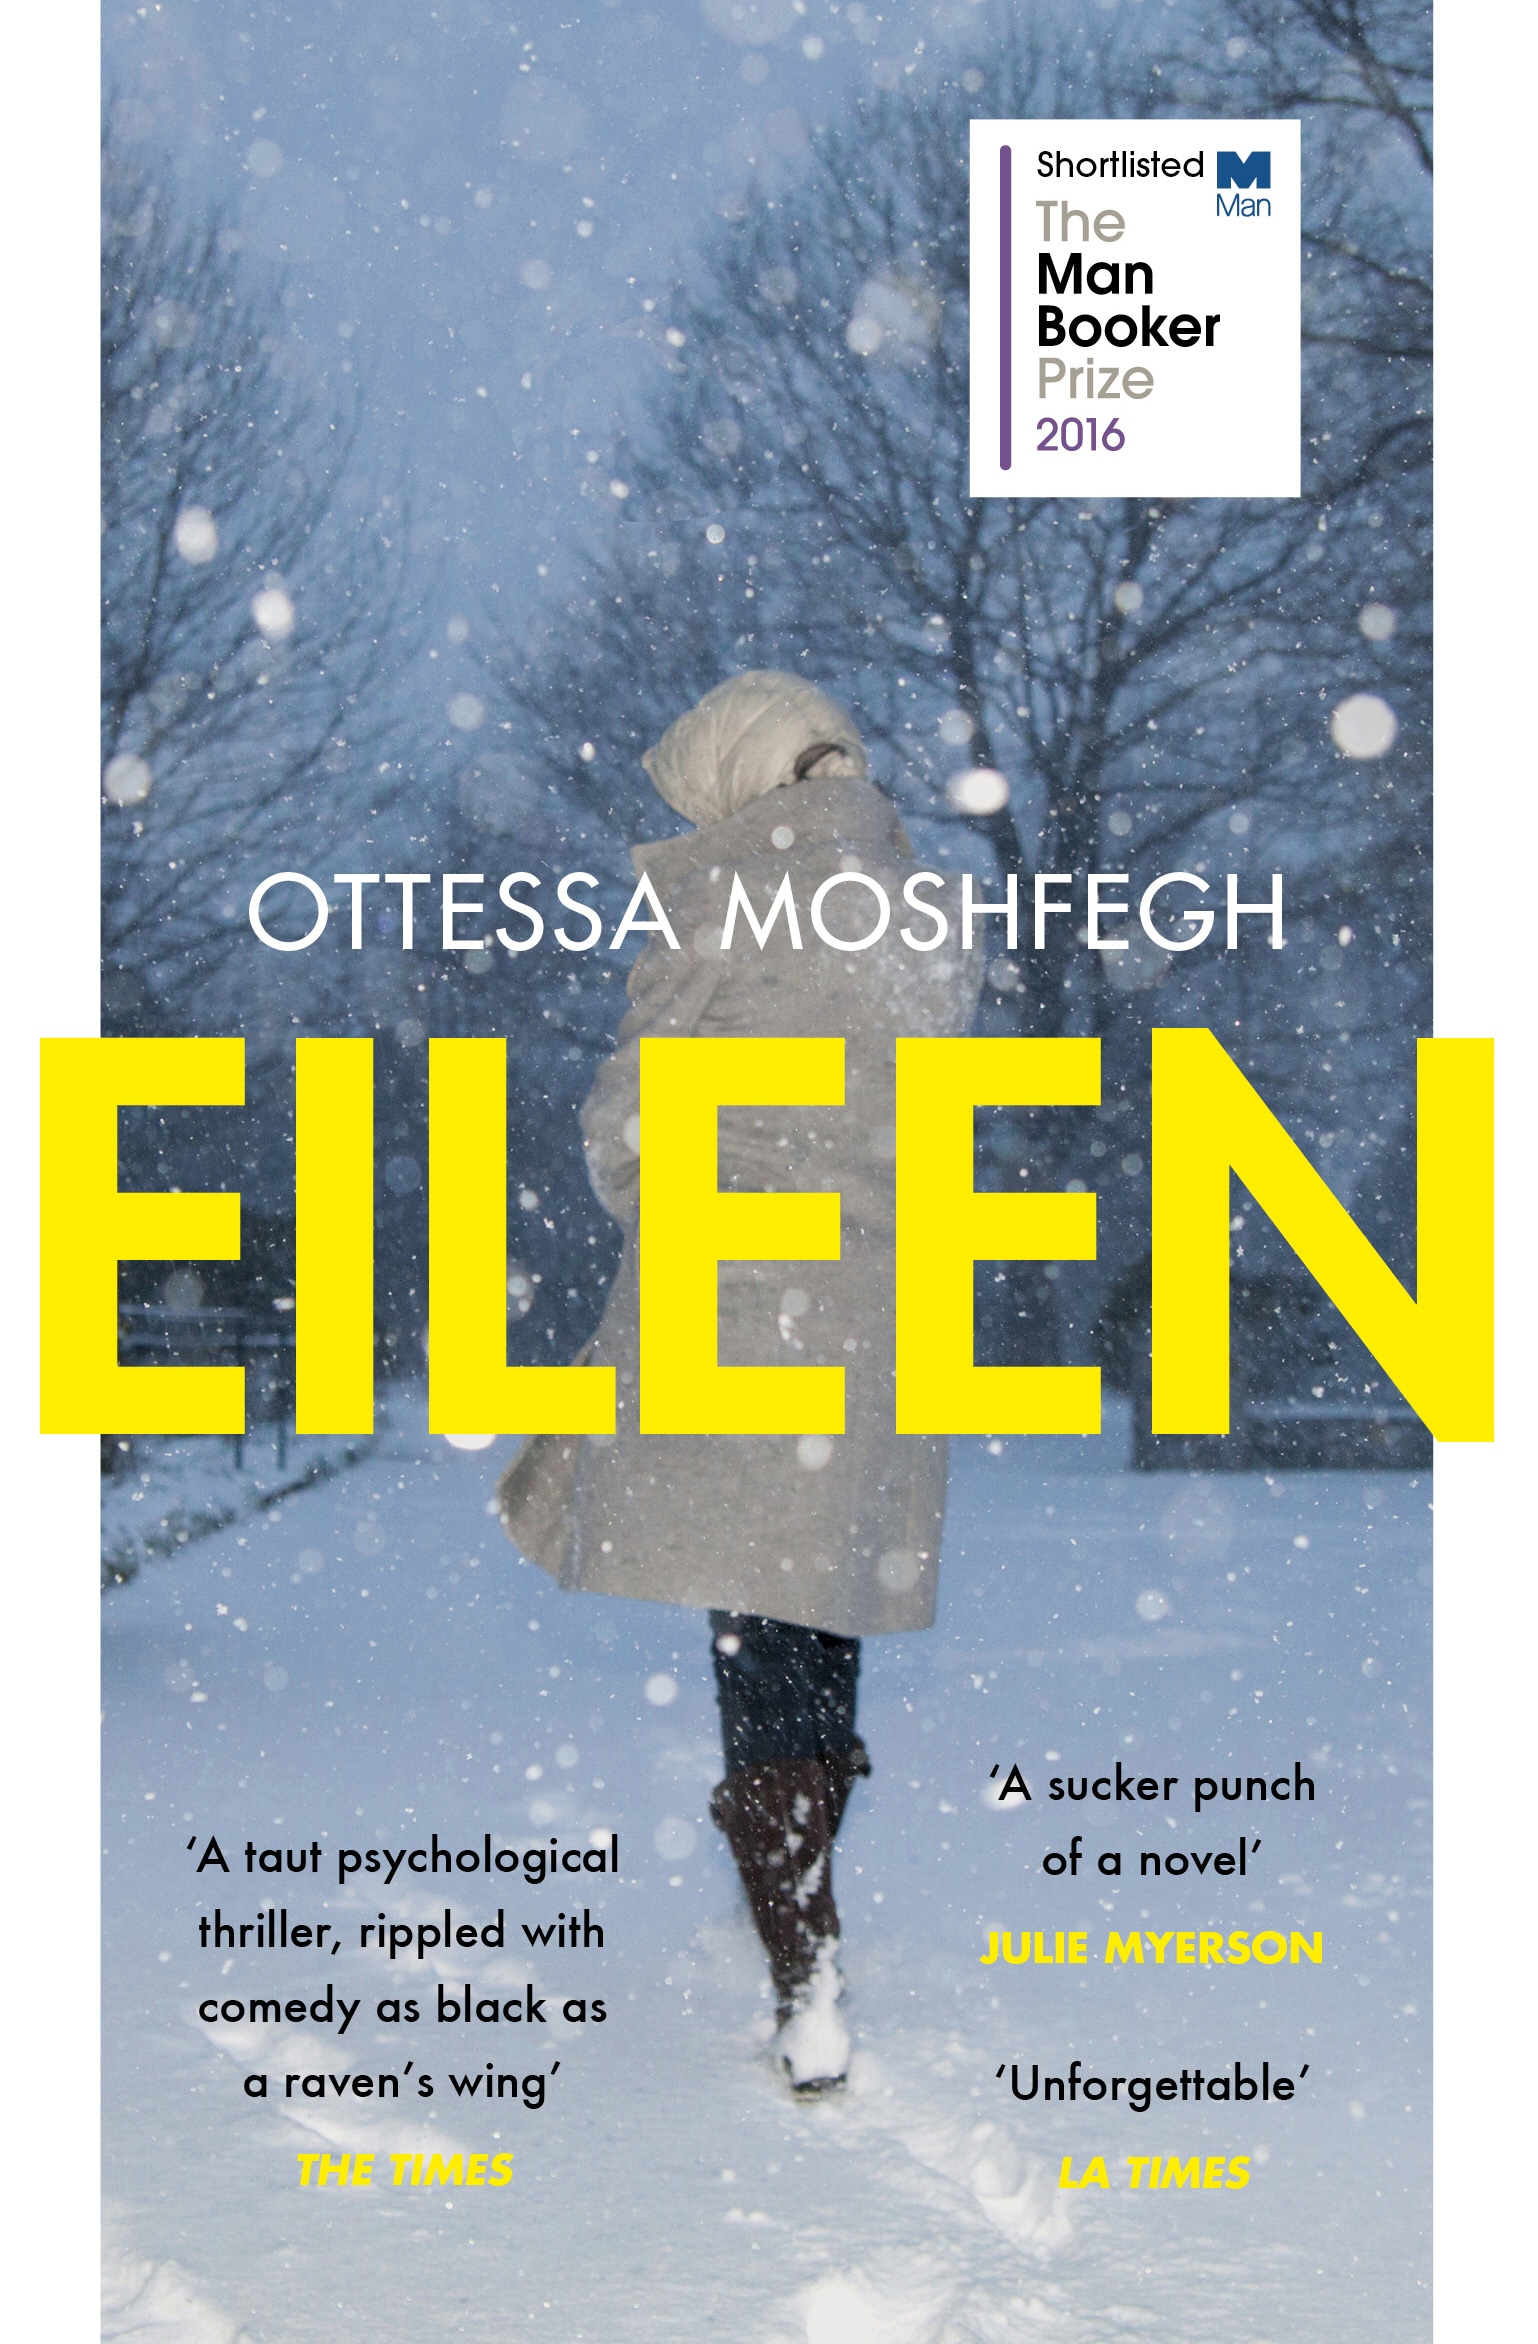 Book “Eileen” by Ottessa Moshfegh — August 18, 2016